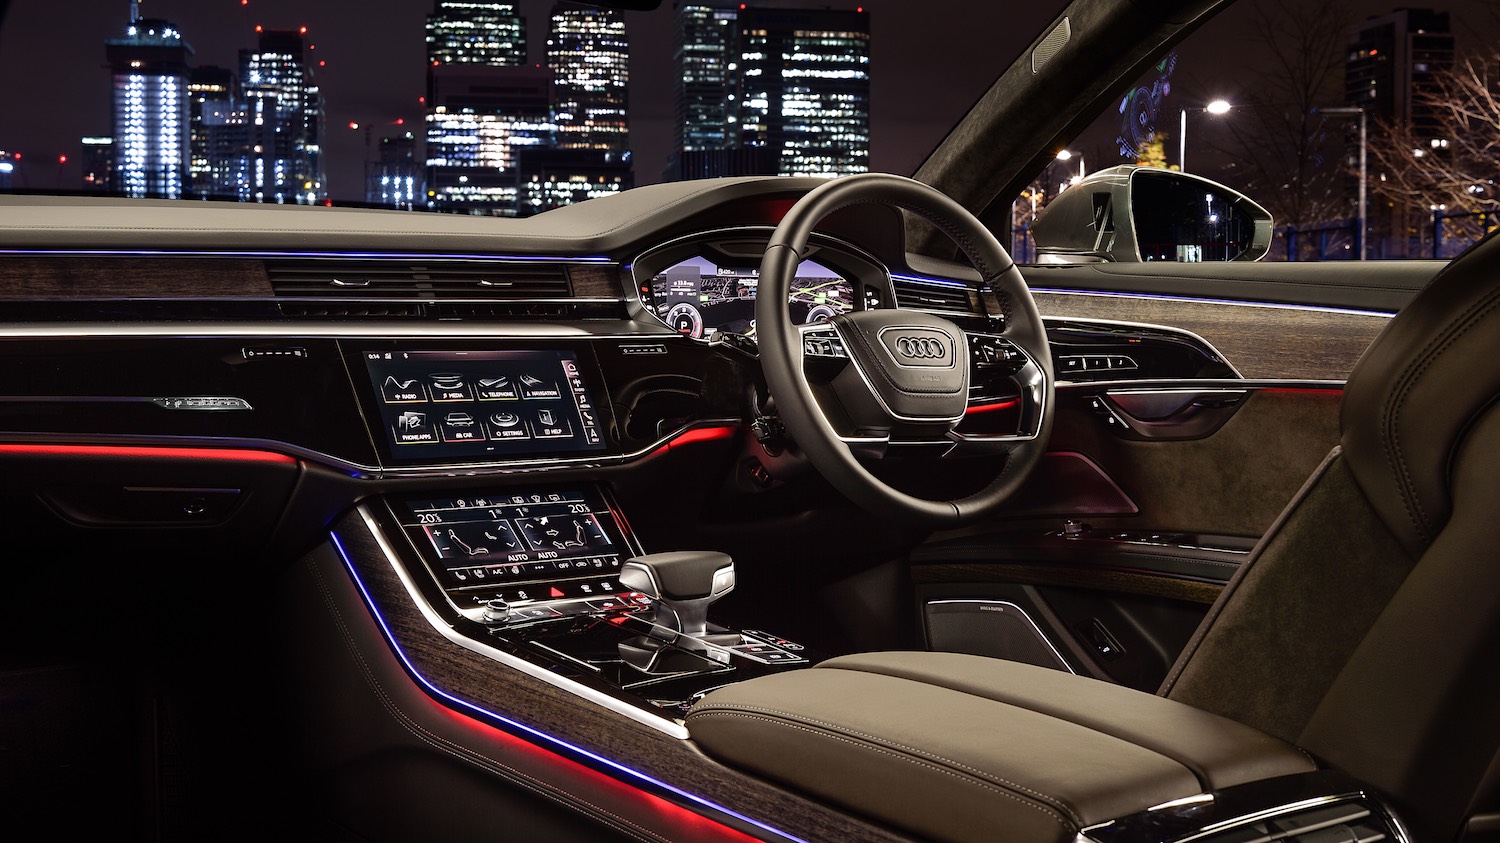 Tom Scanlan reviews the latest Audi A8 50 TDI luxury sports saloon 4